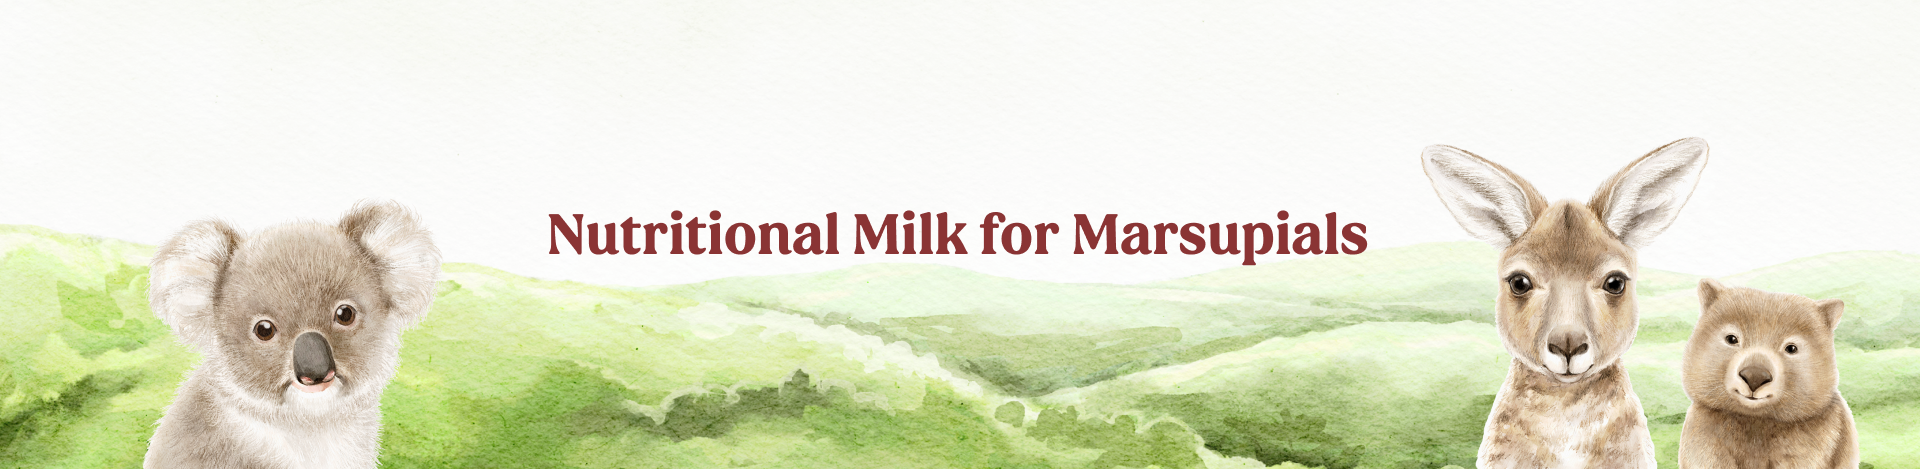 Nutritional Milk for Marsupials Banner